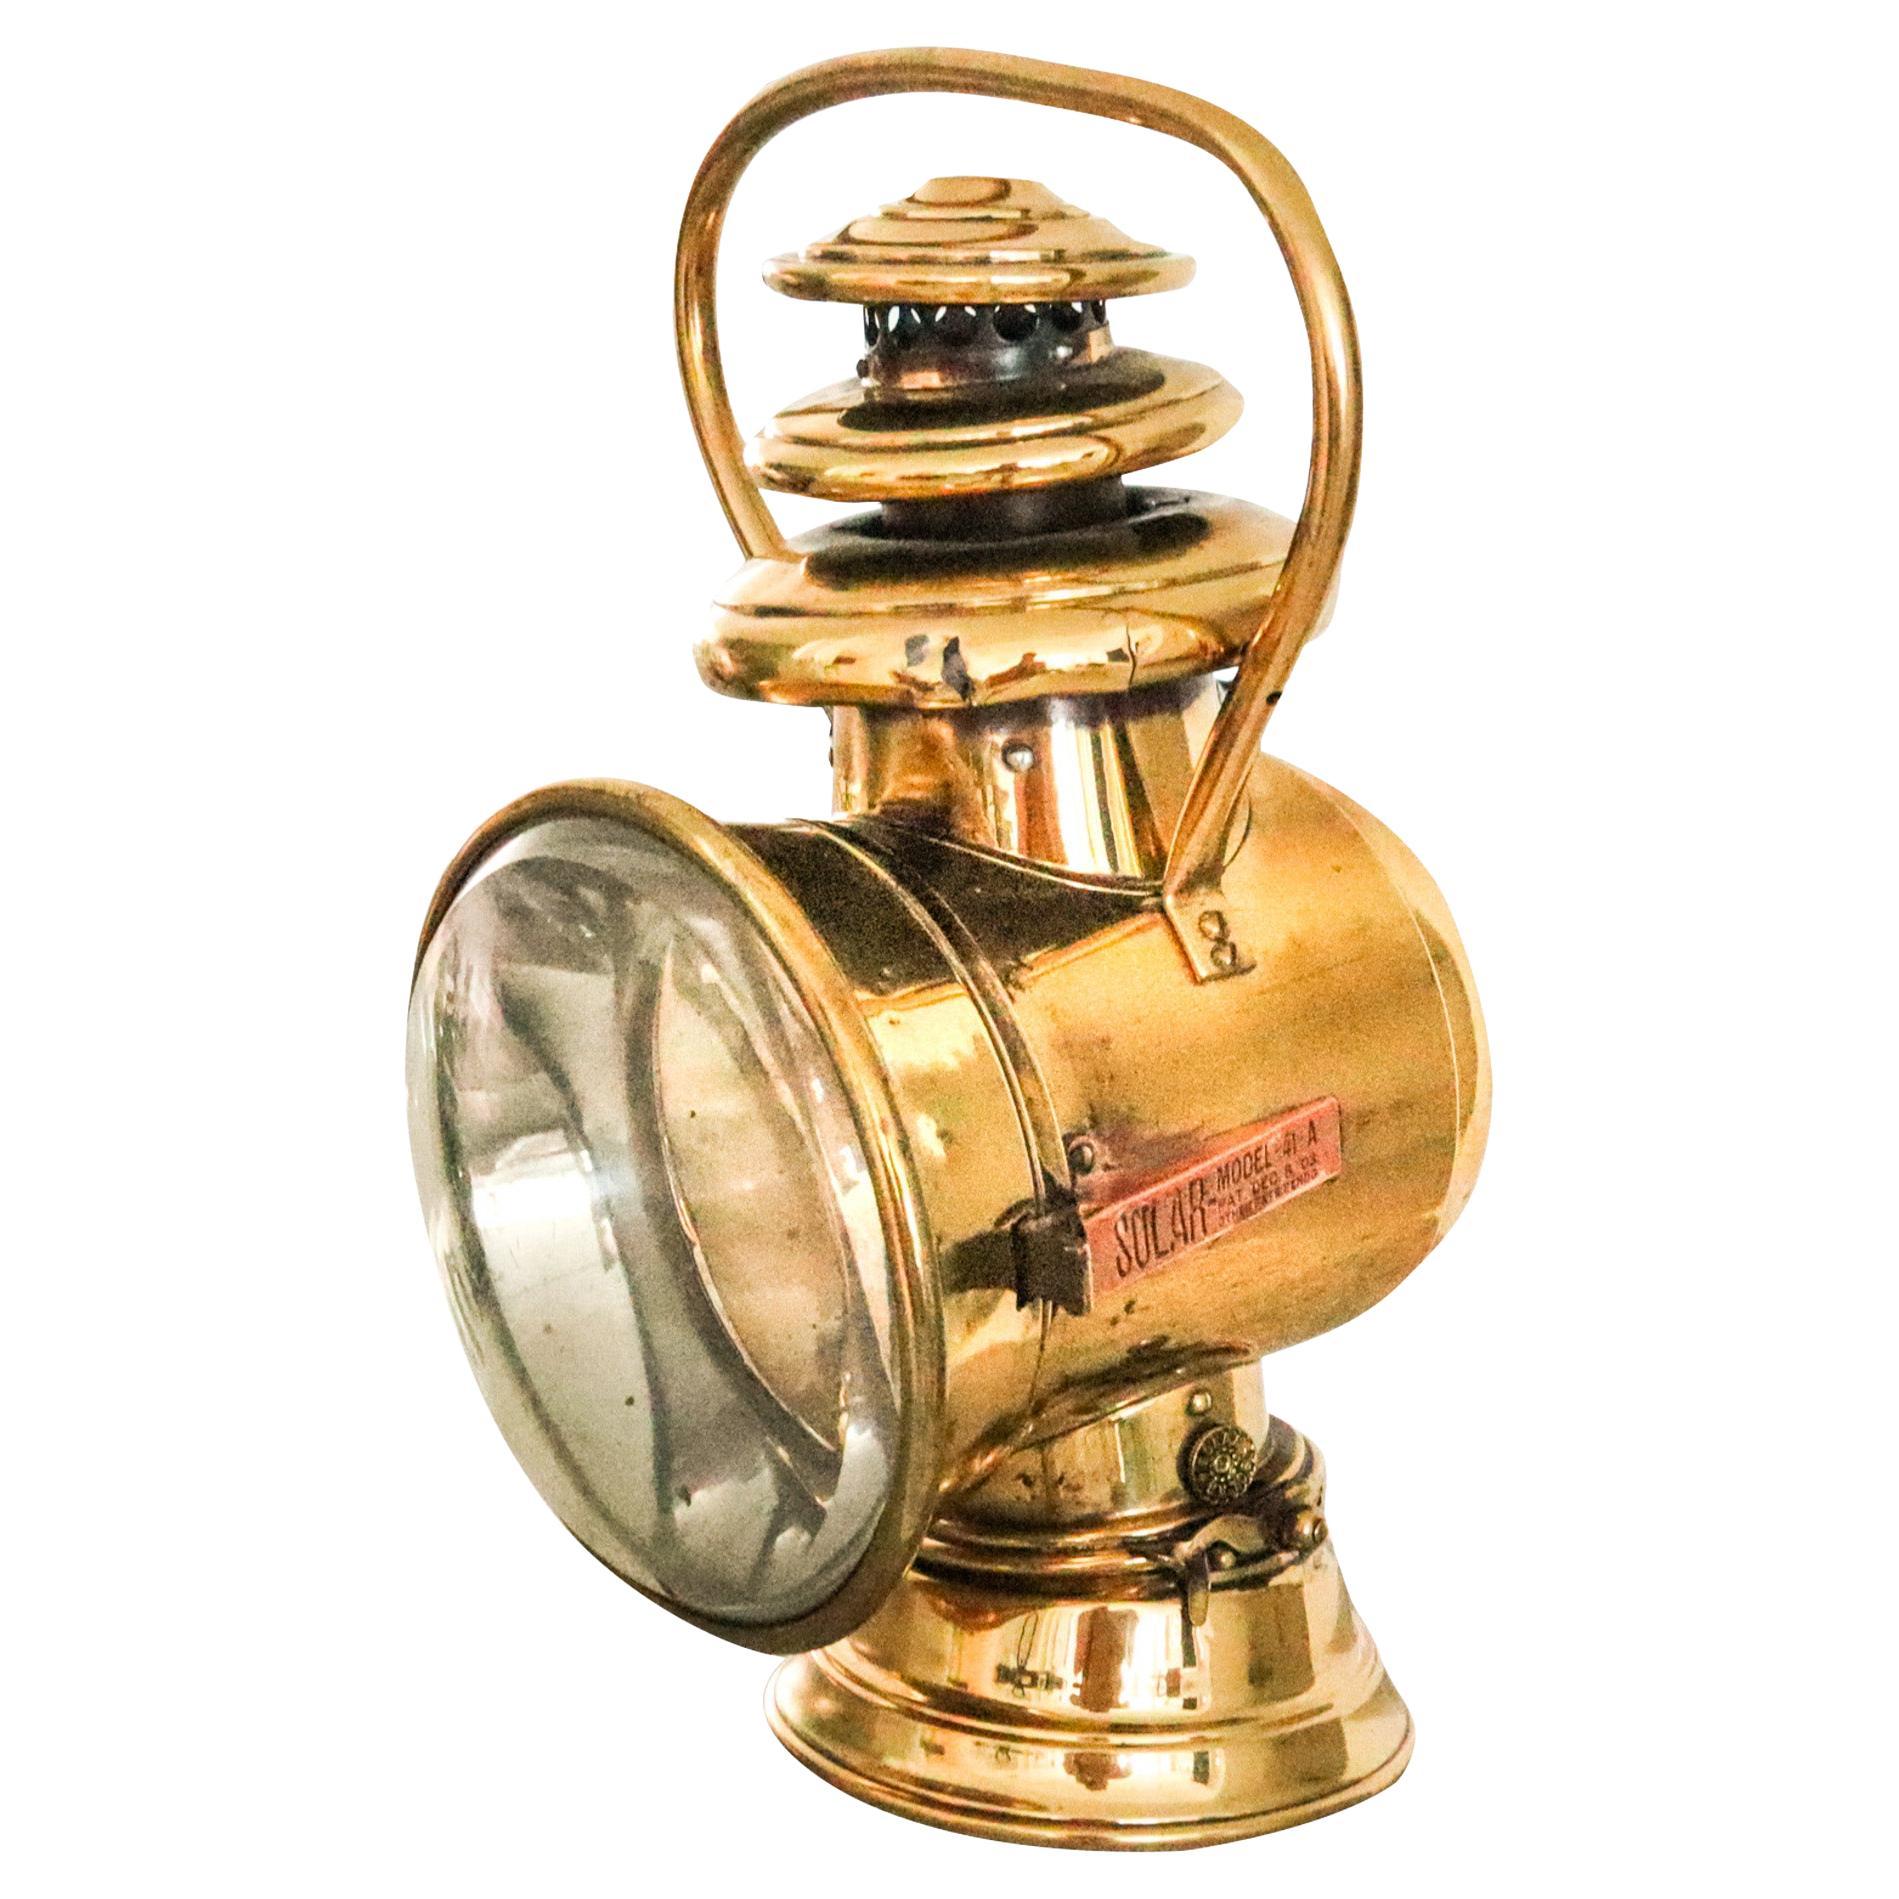 Le Badger Brass Mfg. Lampe automobile solaire Kerosene Co. 1903 en laiton poli